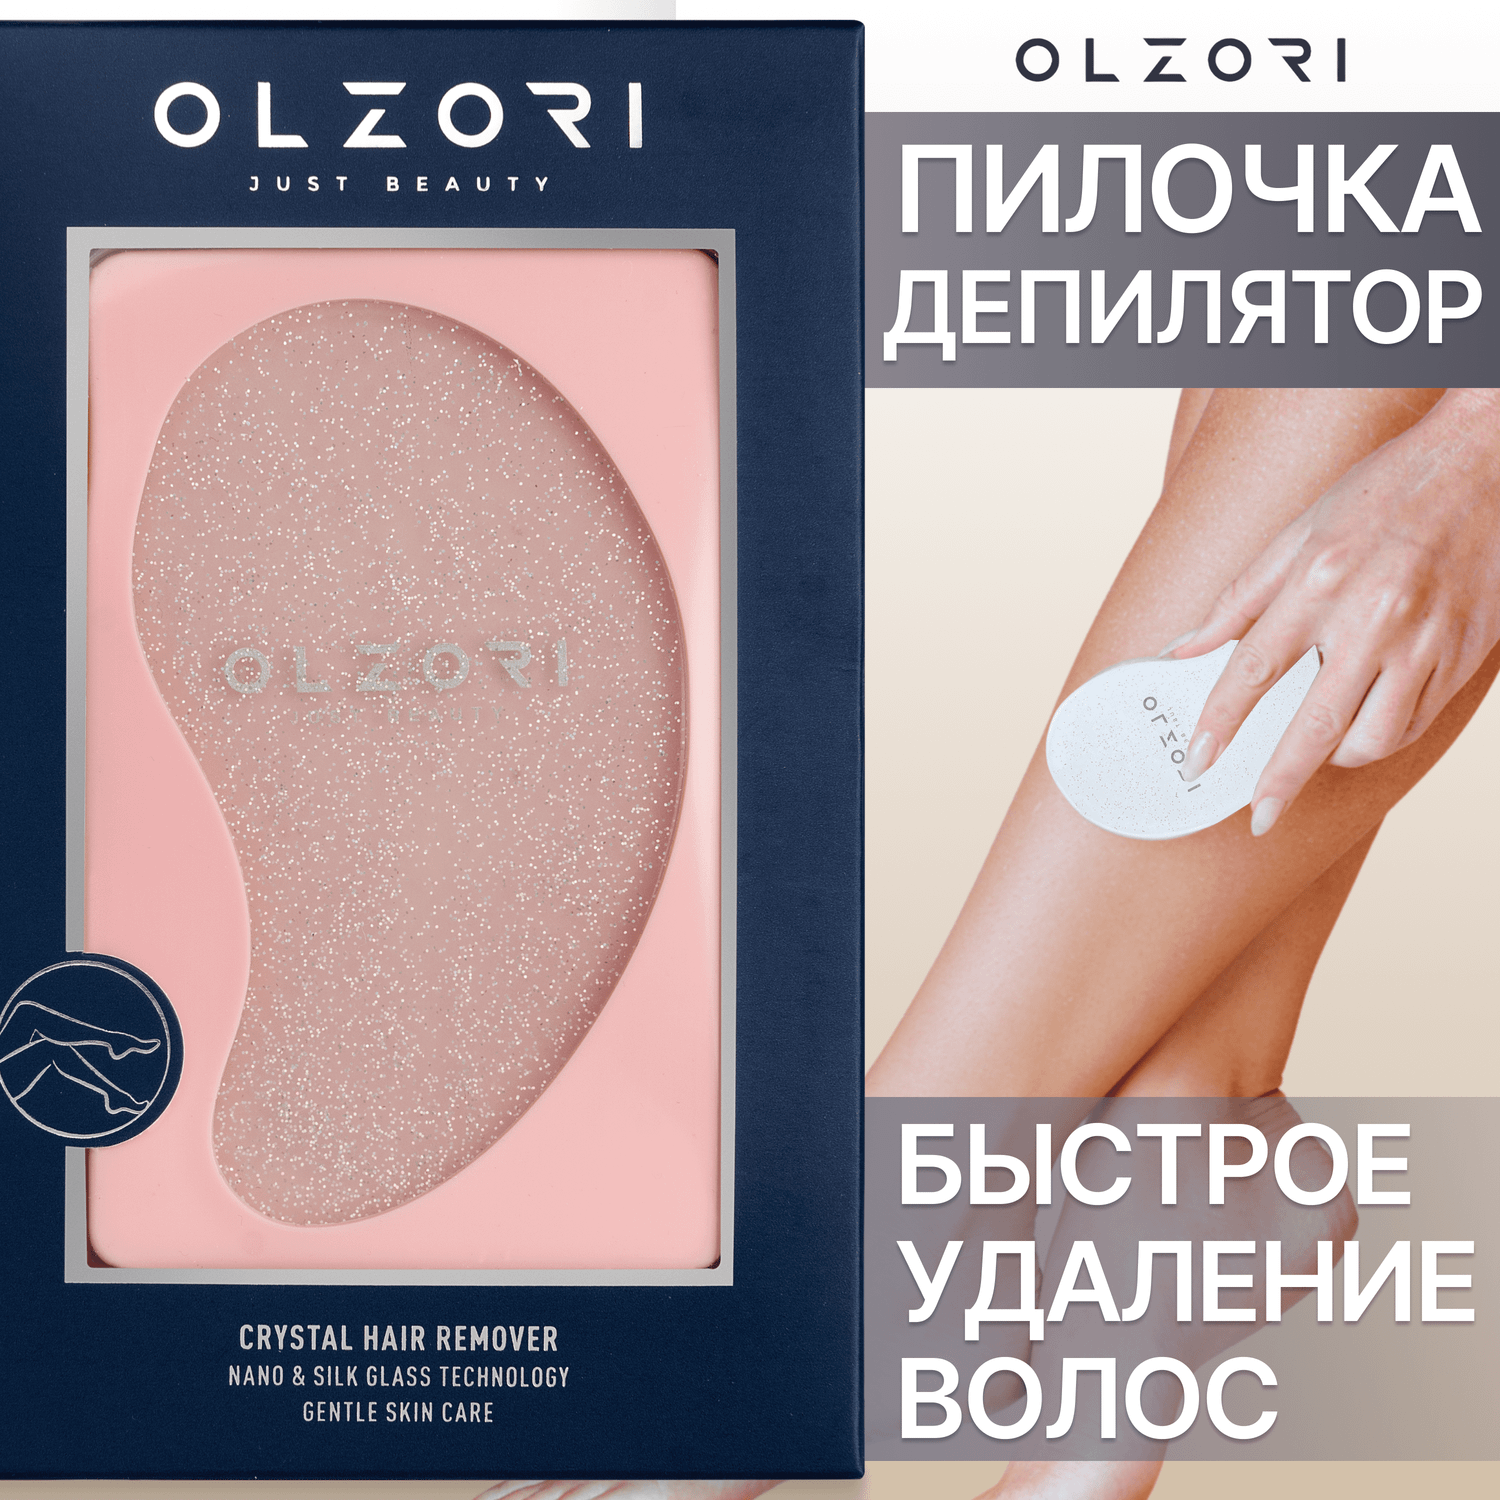 Ластик депилятор OLZORI VirGo Magic Skin - фото 1